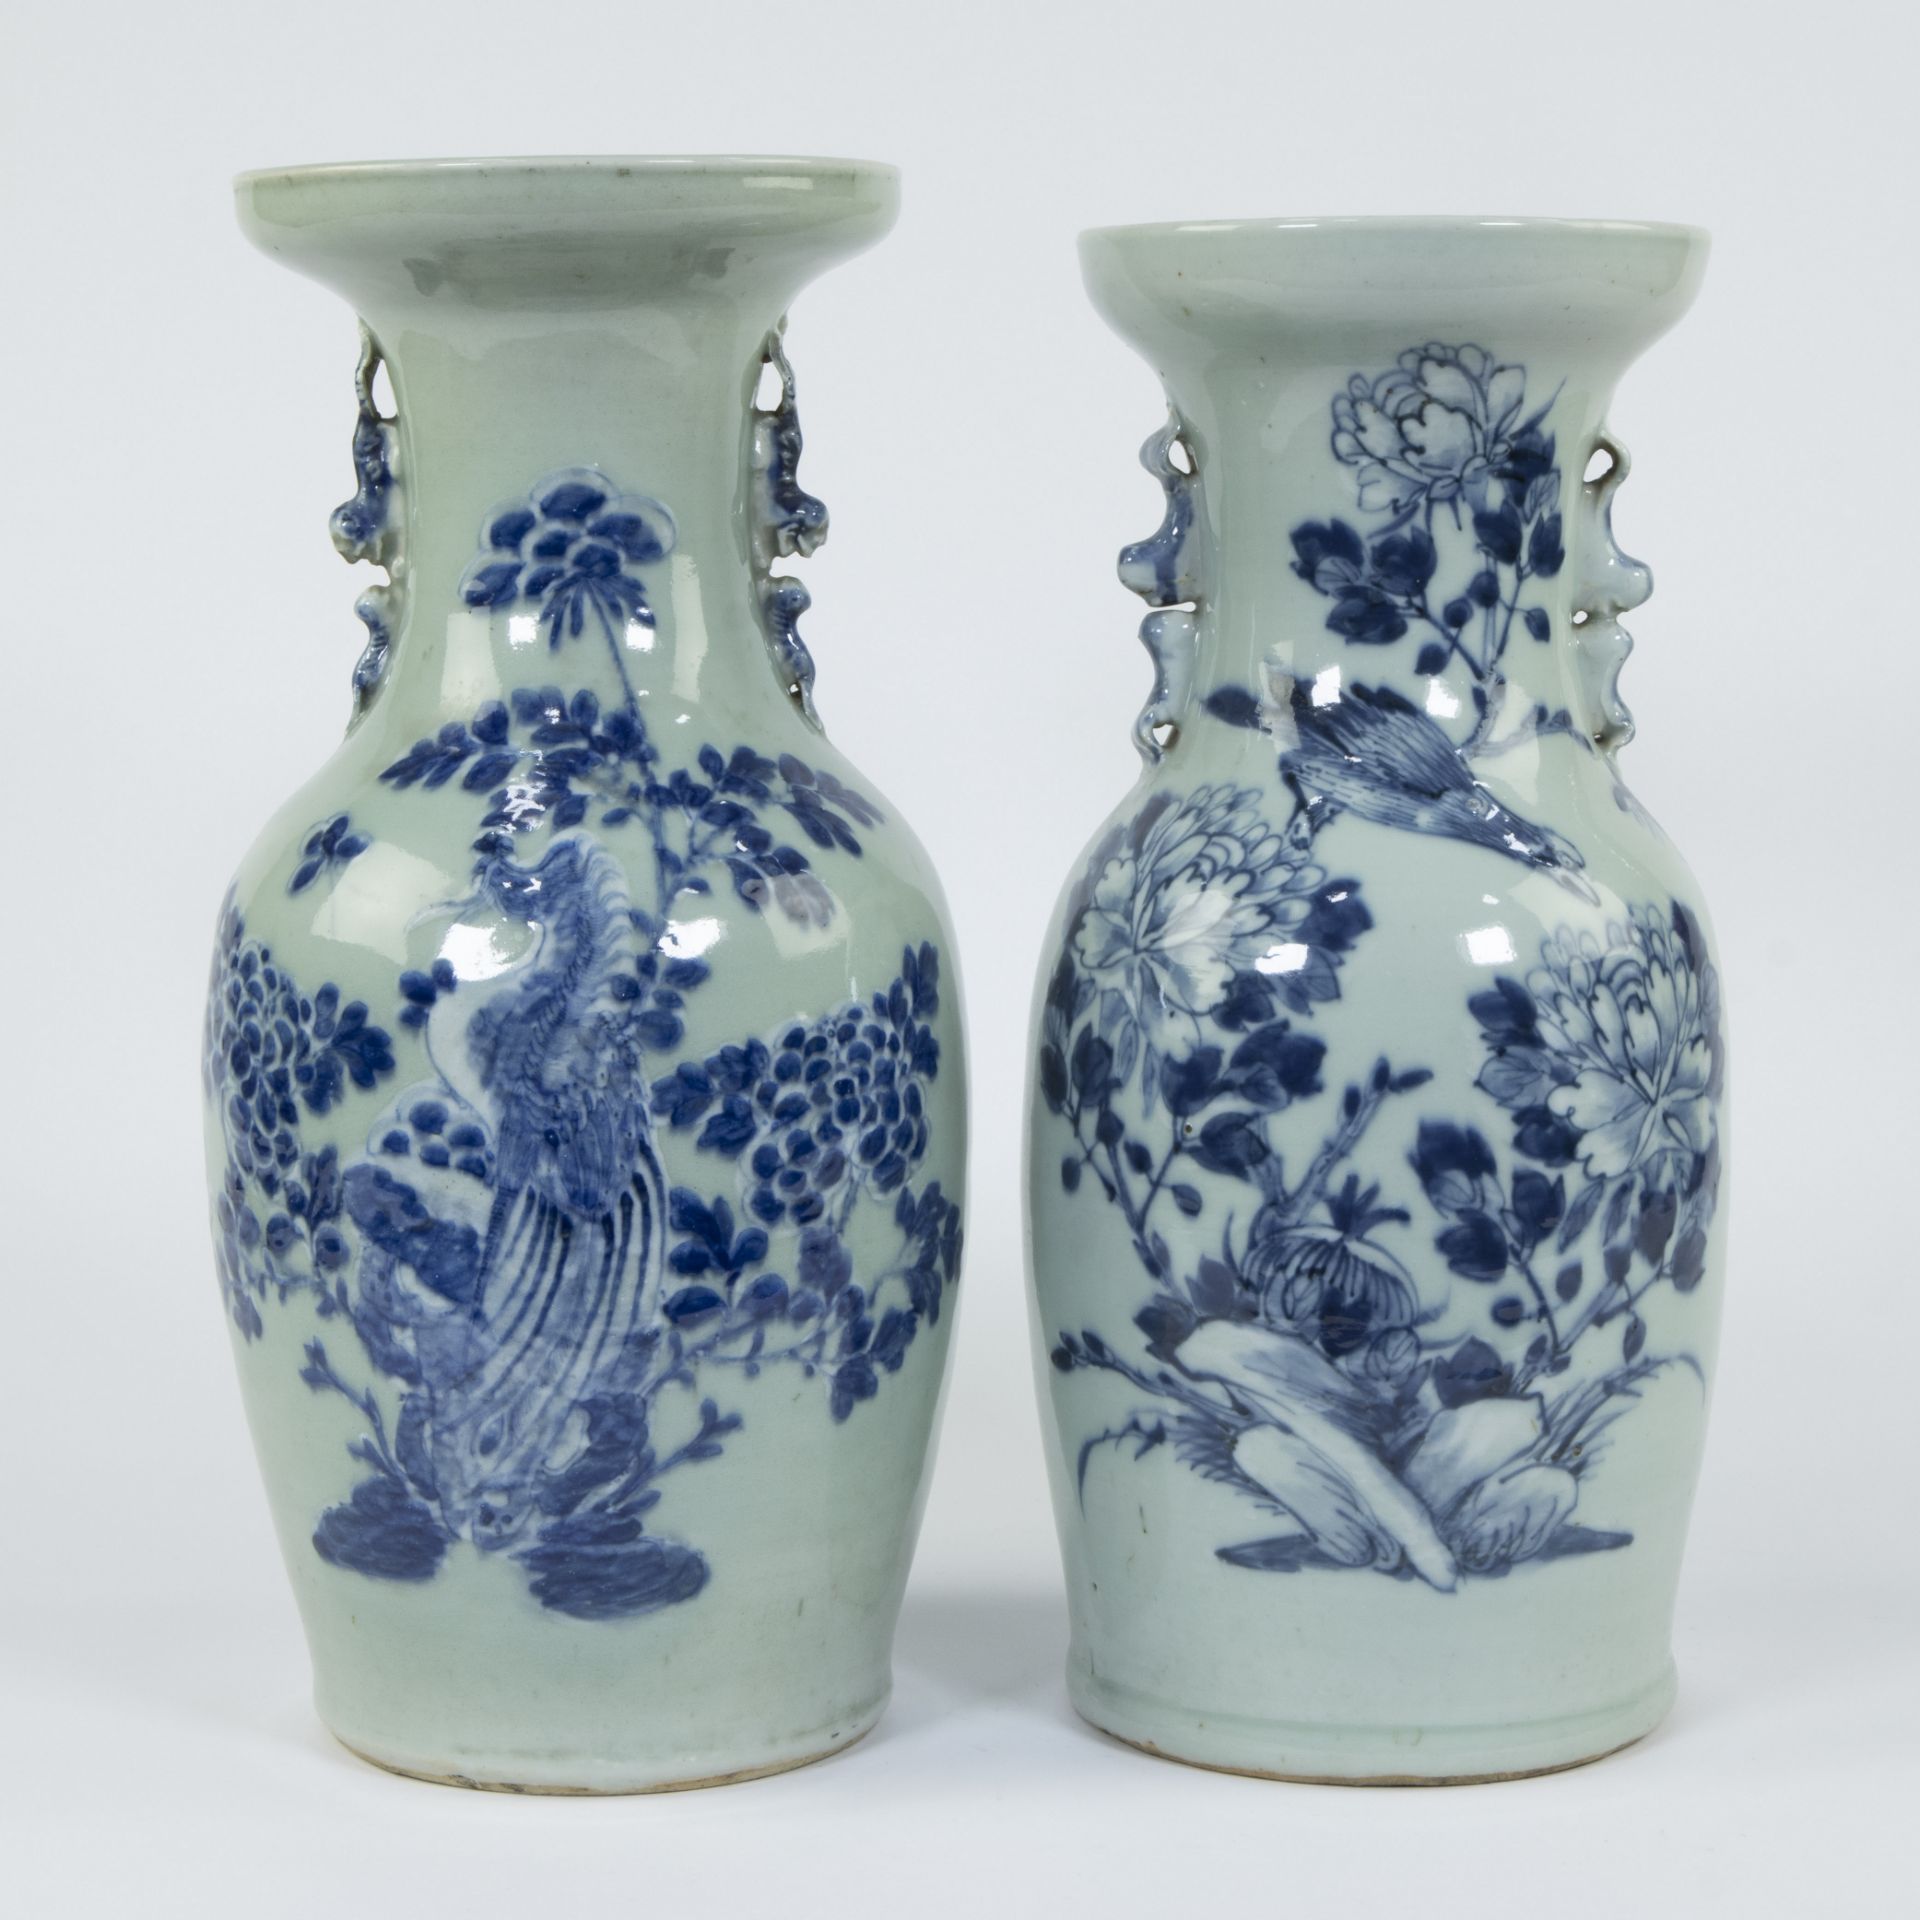 Set of 2 Chinese celadon vases, 19th century